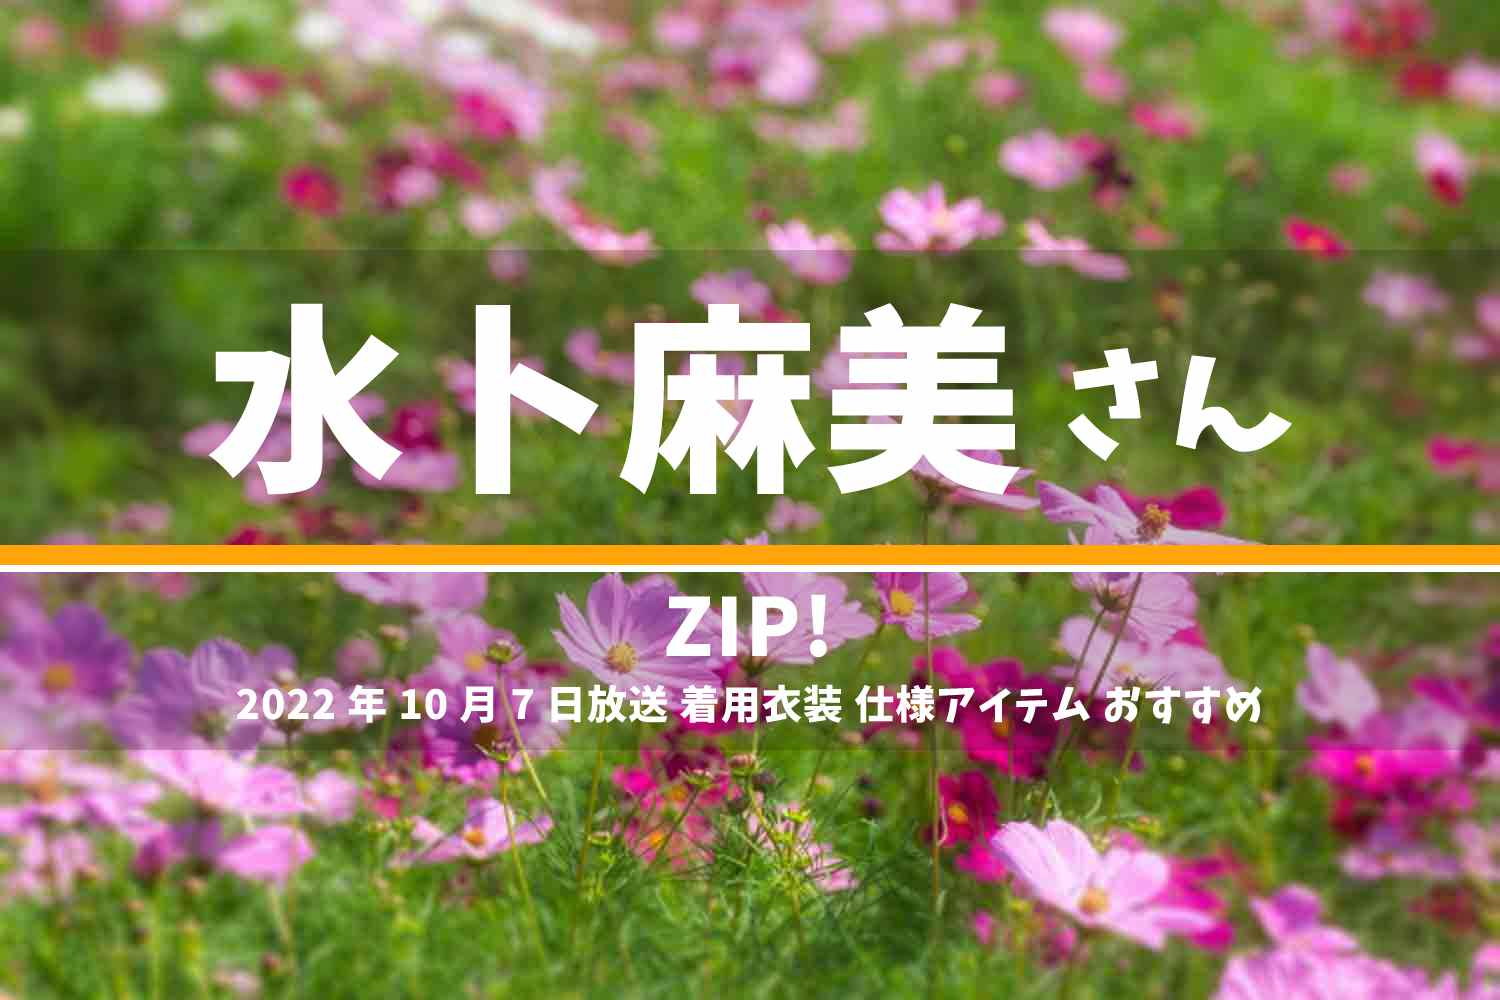 ZIP! 水卜麻美さん 番組 衣装 2022年10月7日放送